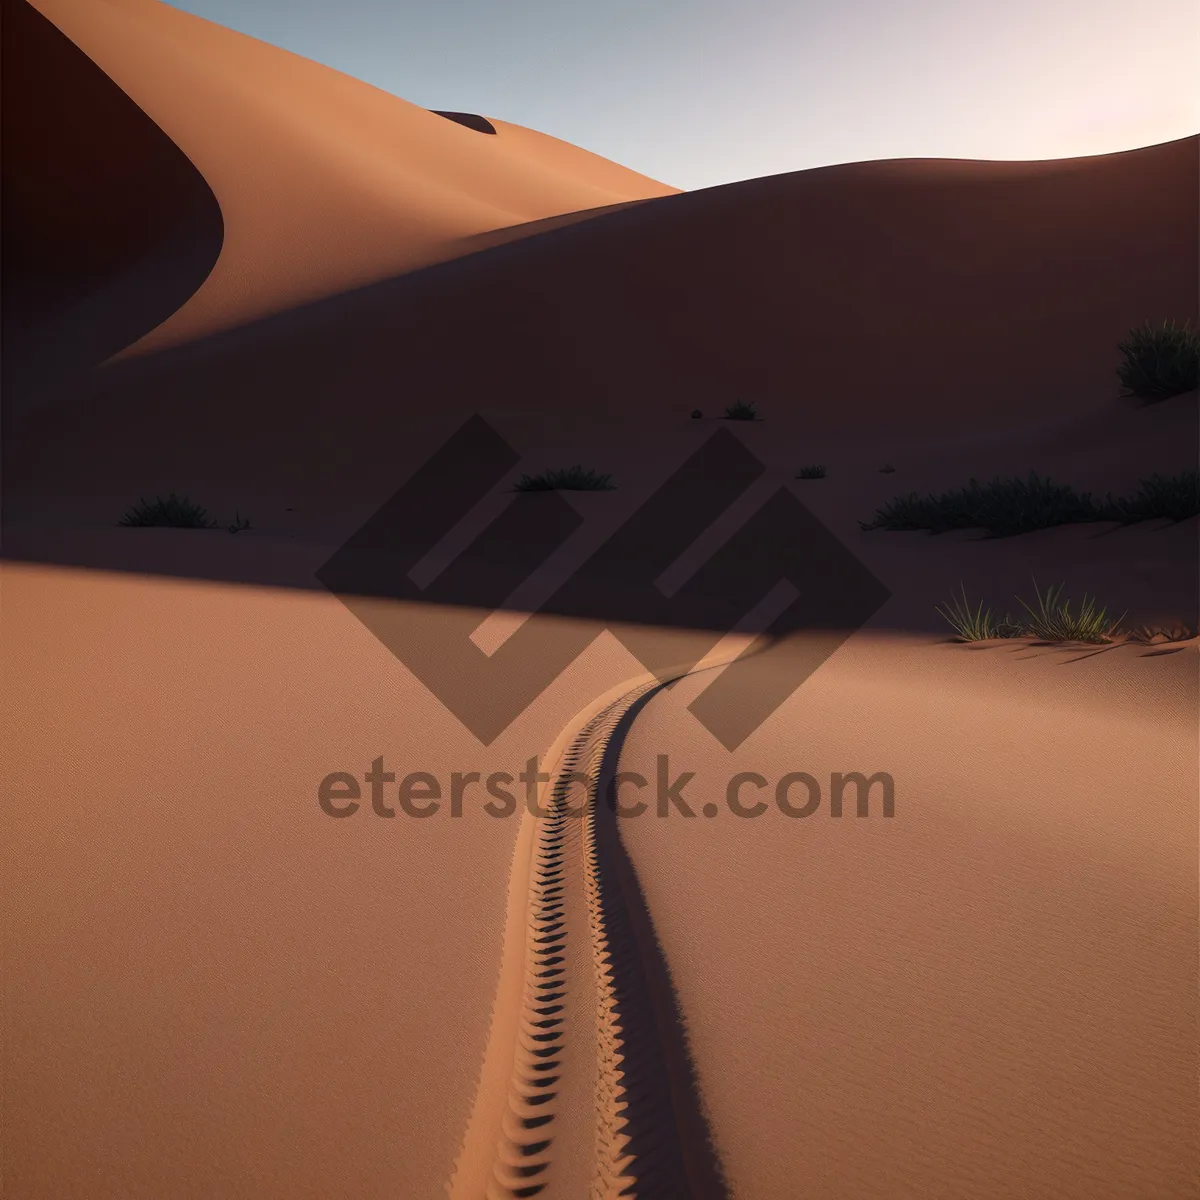 Picture of Sandy Serenity: A Majestic Desert Landscape